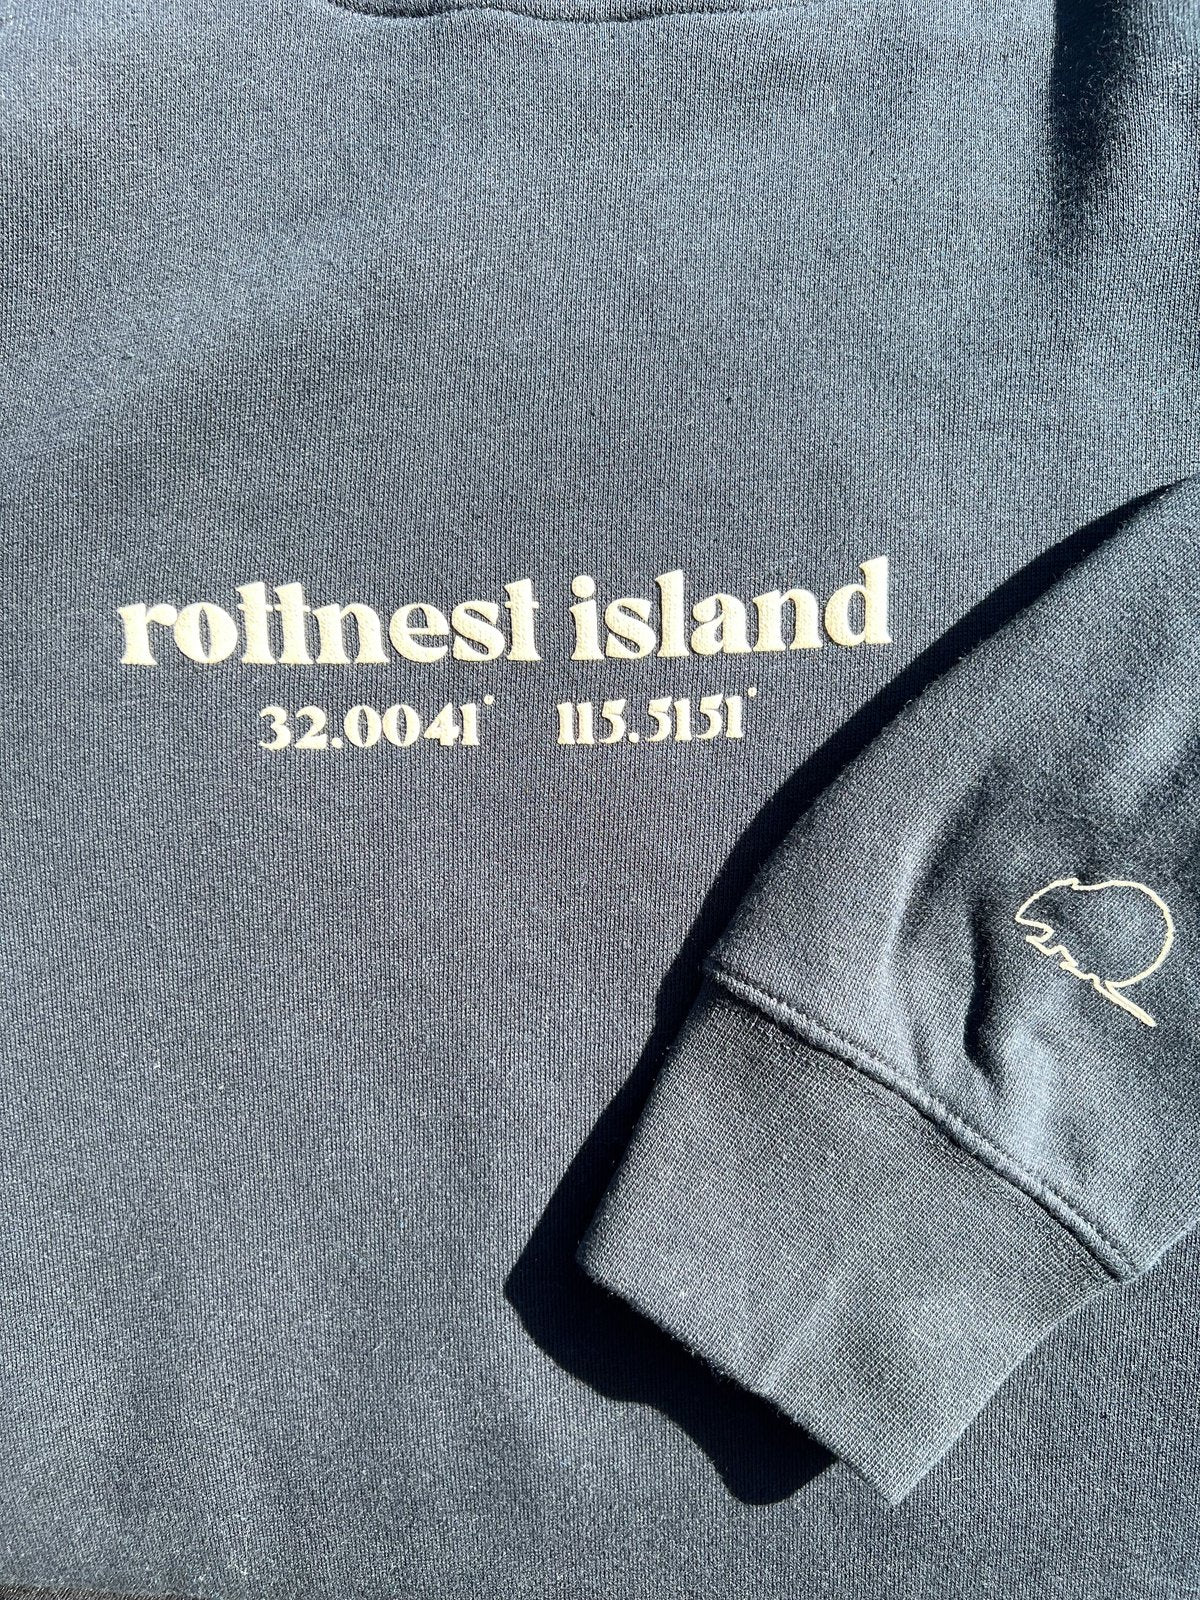 Rottnest Island Puff Print Hoodie